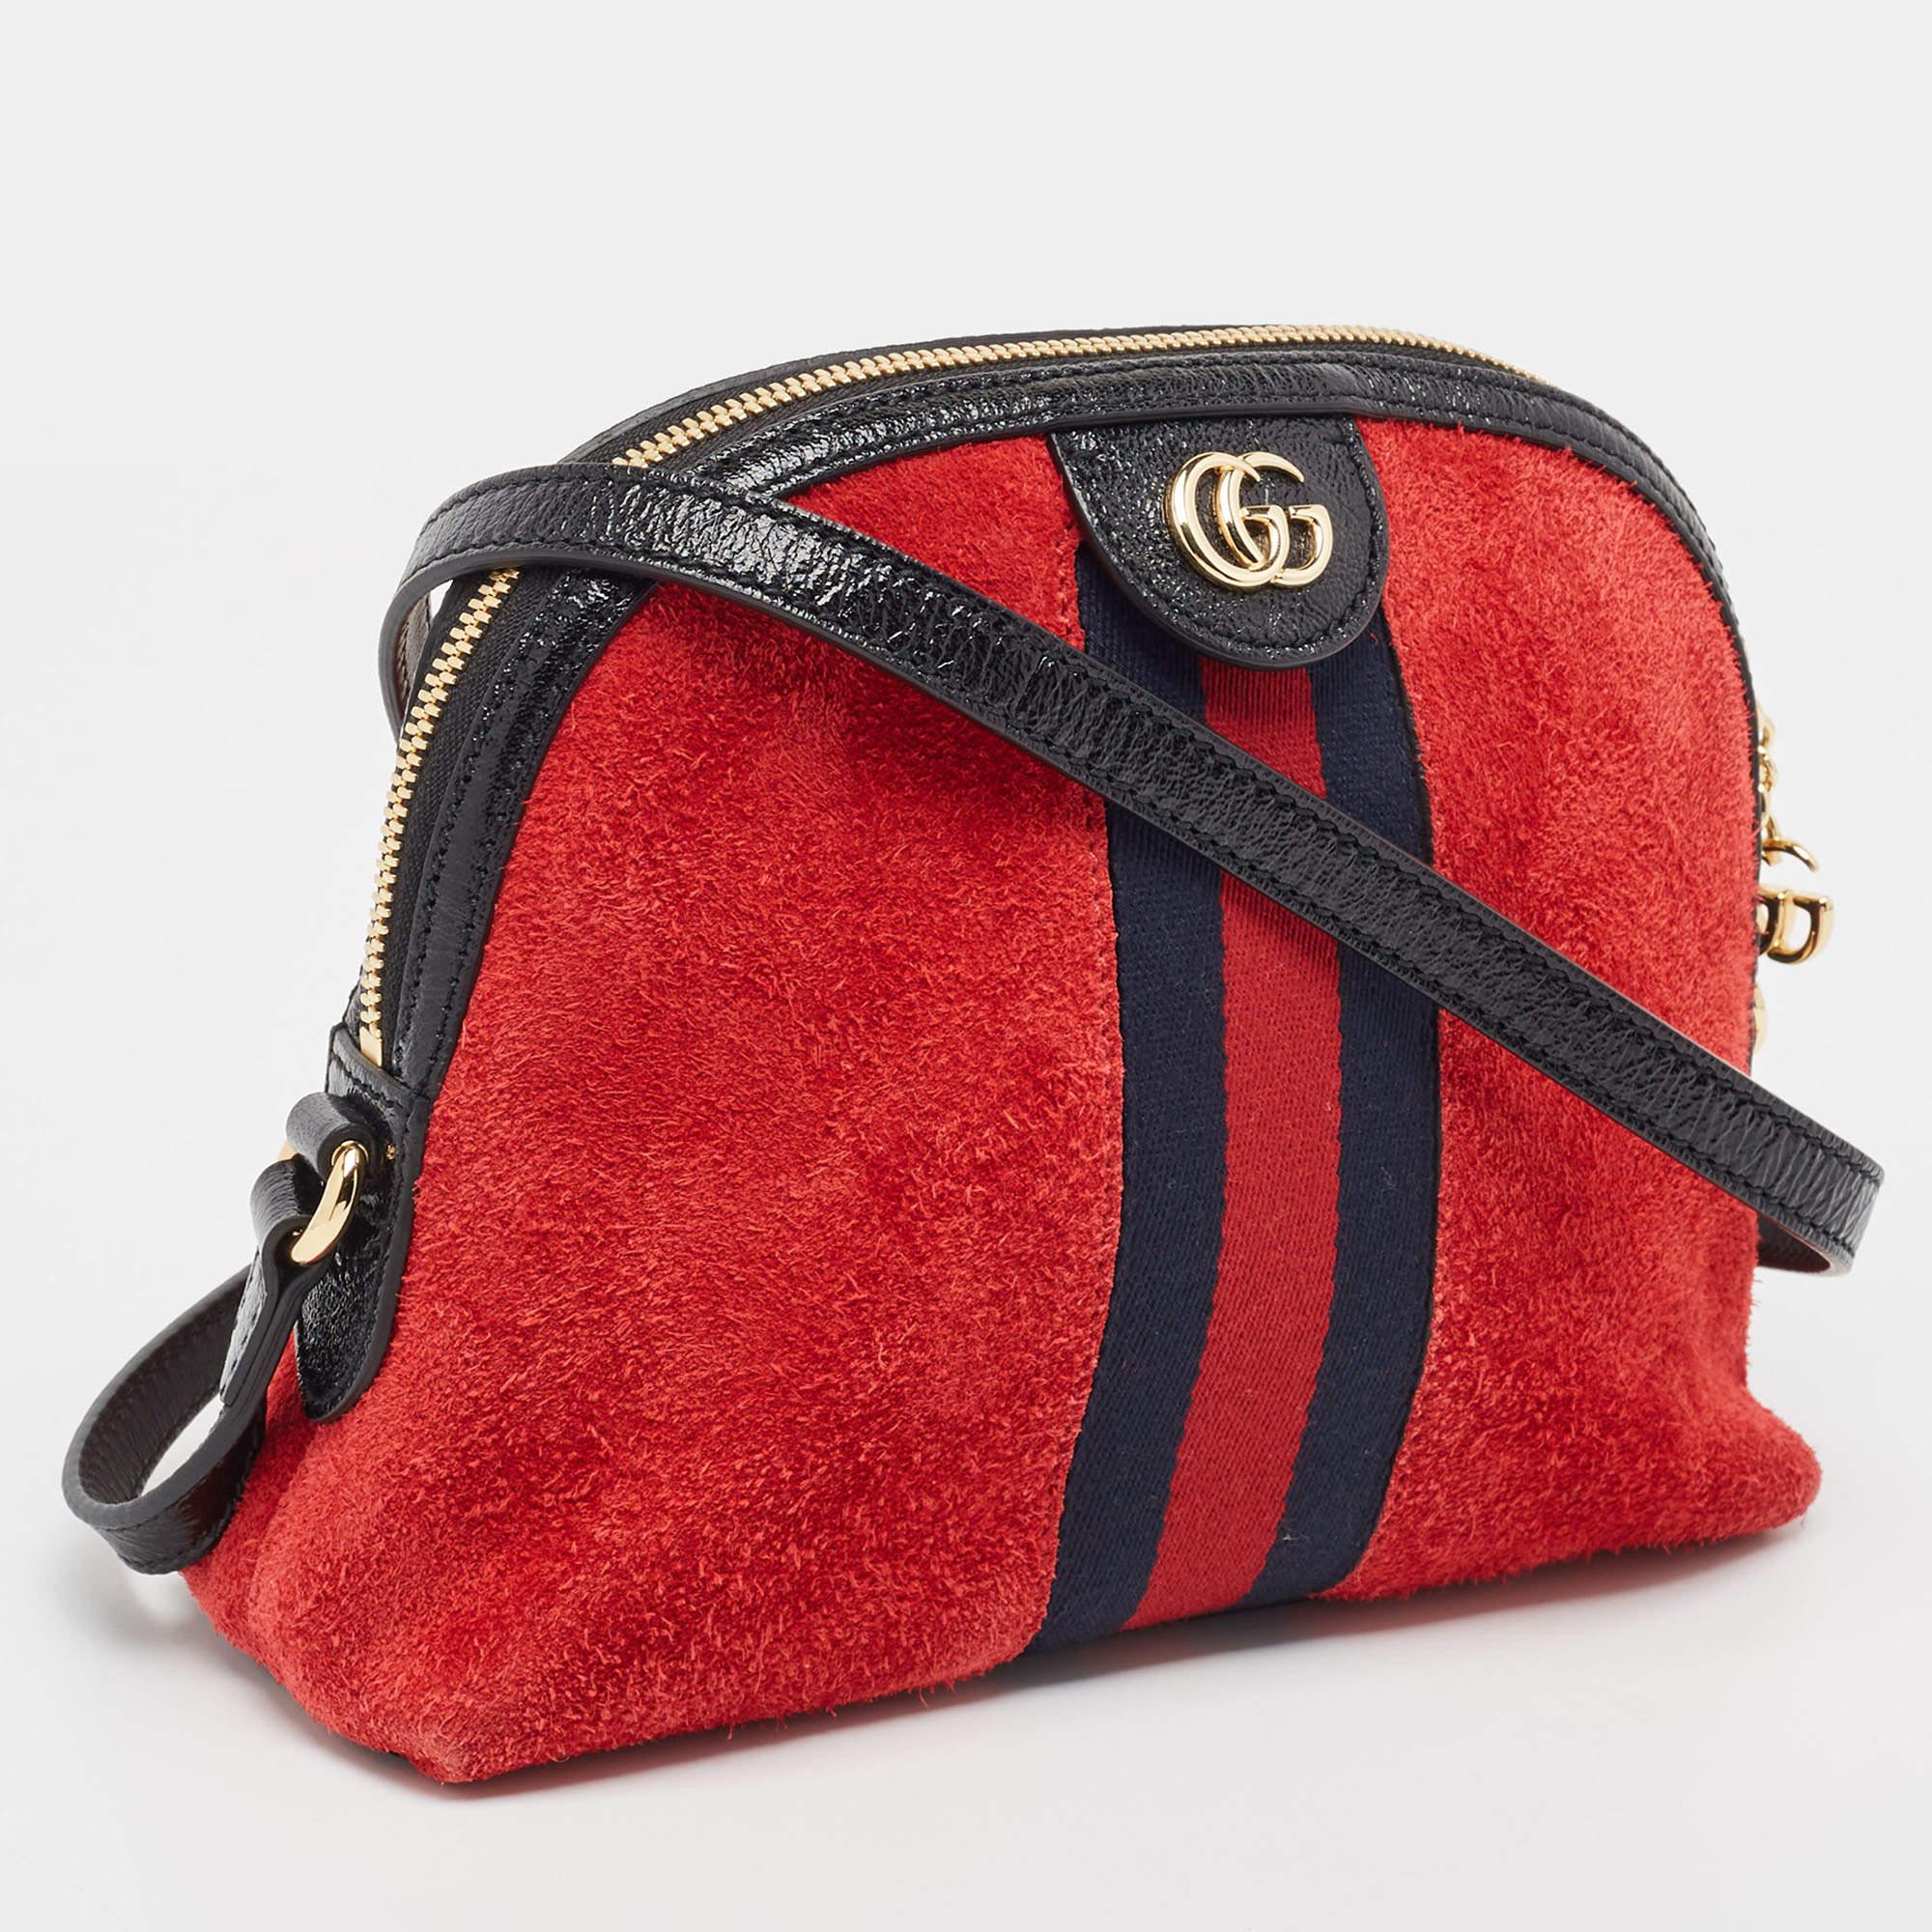 Gucci Red/Black Suede Small Web GG Ophidia Shoulder Bag In Excellent Condition For Sale In Dubai, Al Qouz 2